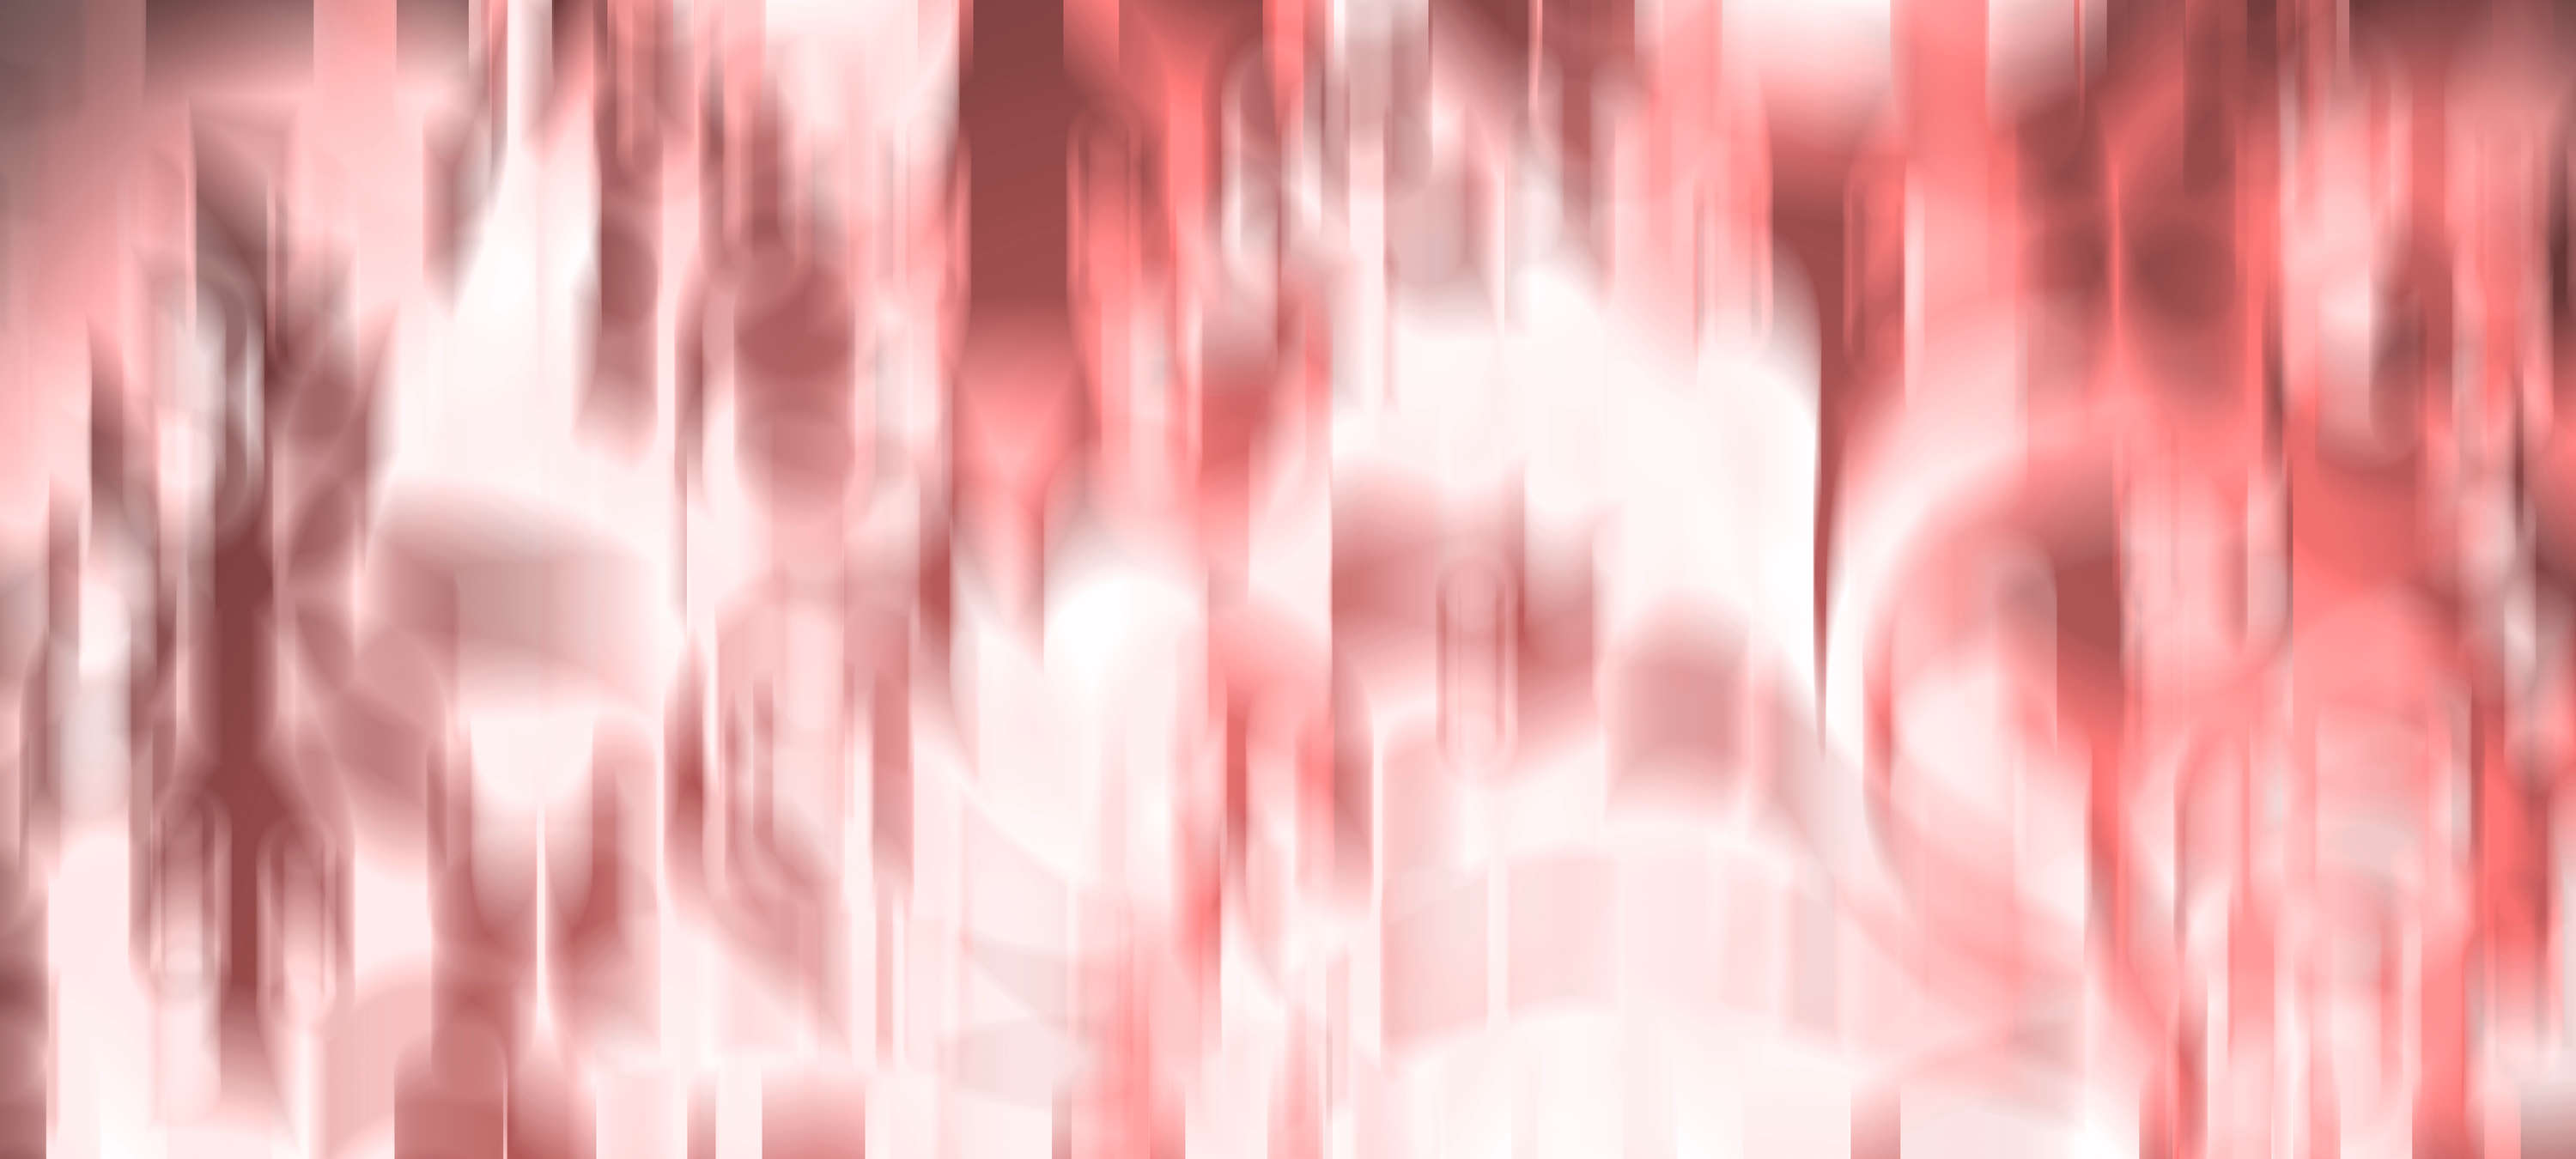             Moderne abstracte & vage ontwerpmuurschildering - Roze, Rood, Wit
        